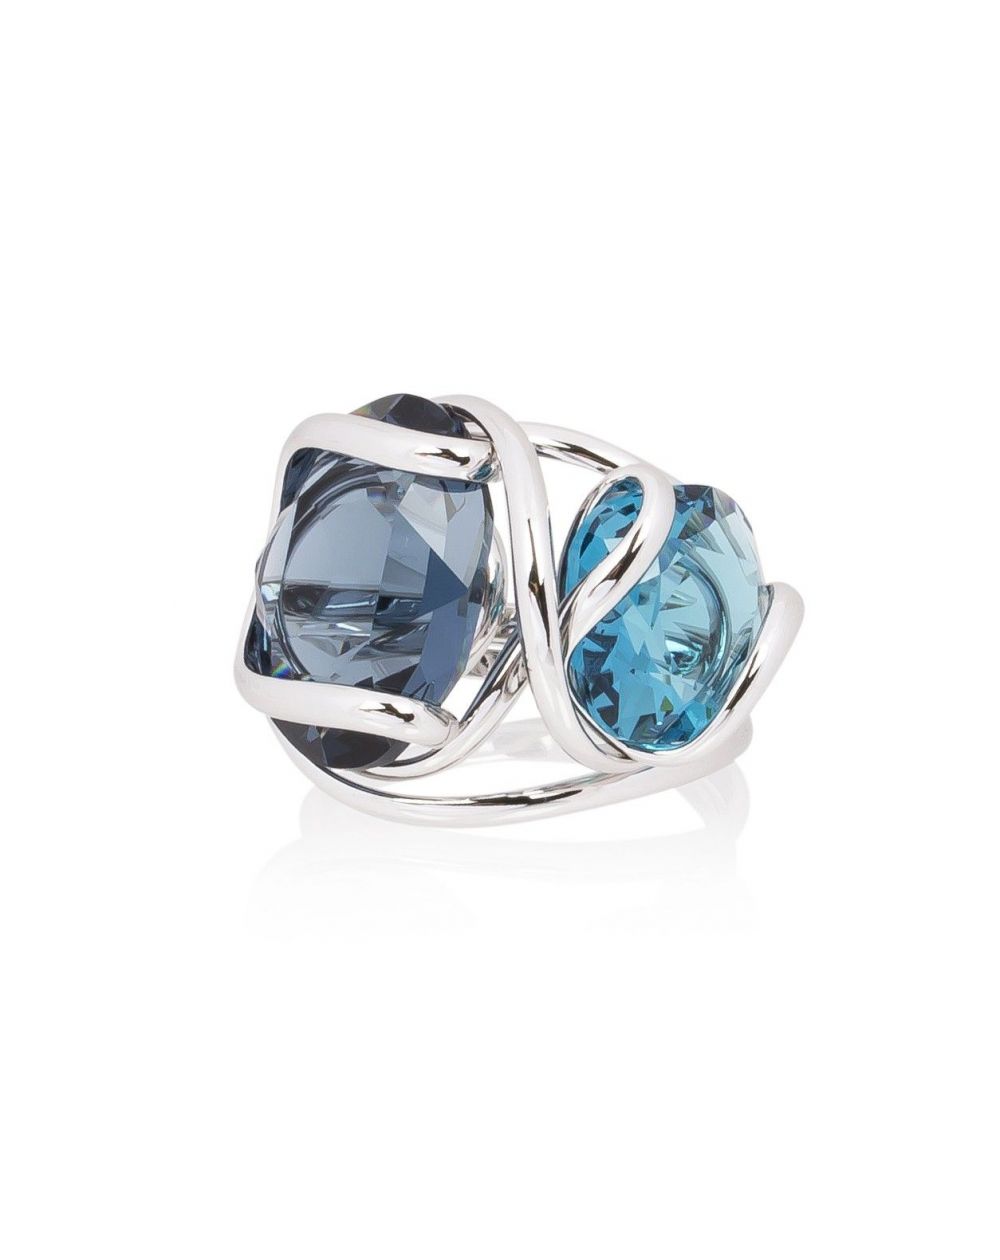 Andrea Marazzini bijoux - Bague cristal Swarovski Ovale Turquoise Mini Double